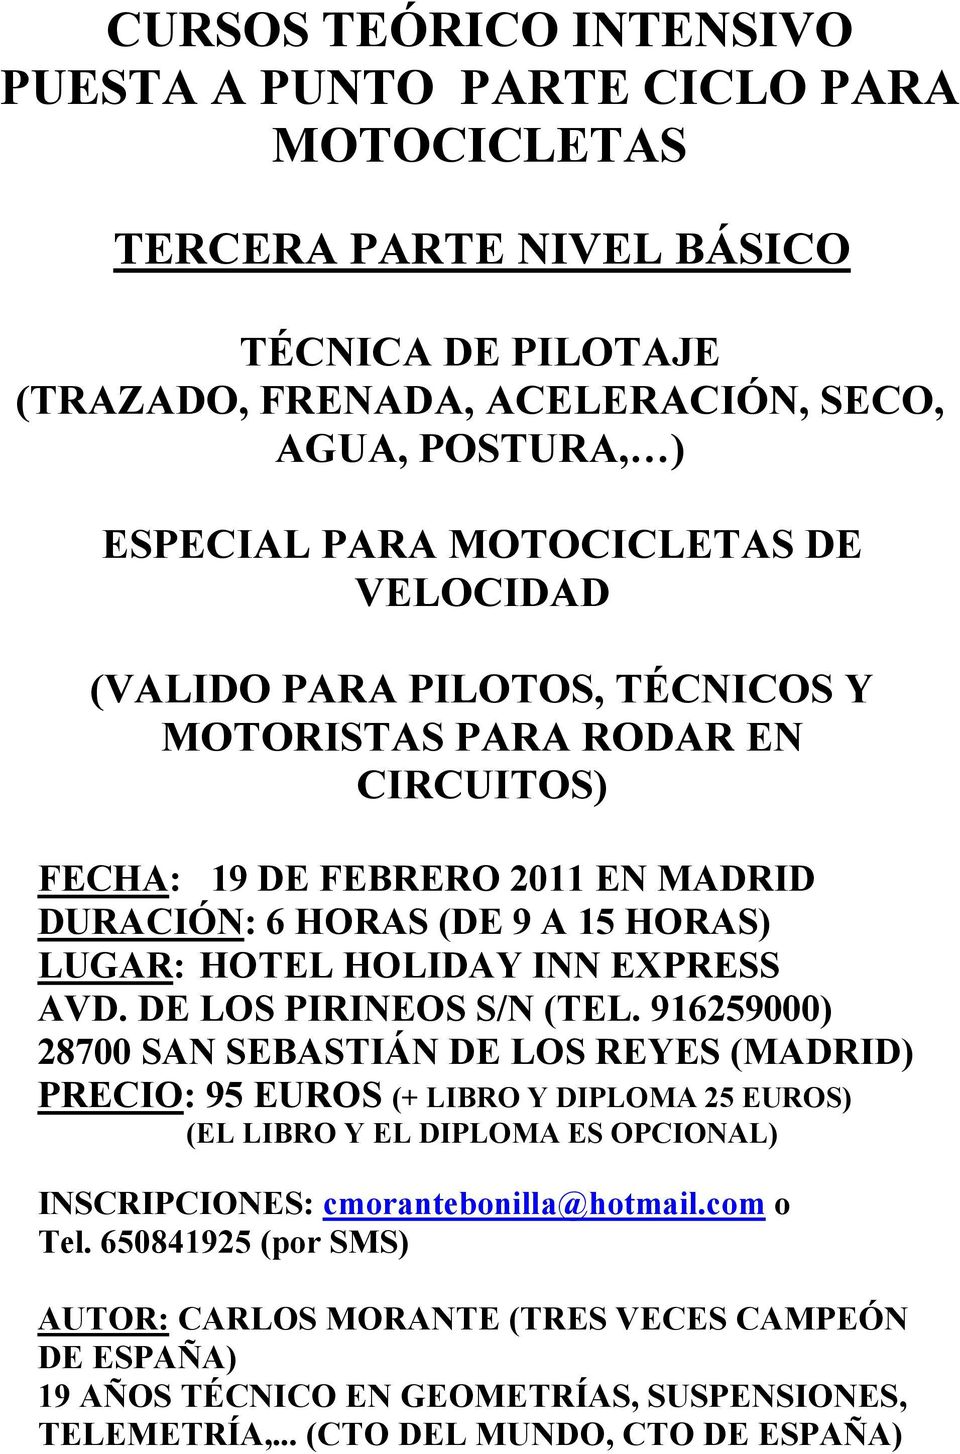 EXPRESS AVD. DE LOS PIRINEOS S/N (TEL.